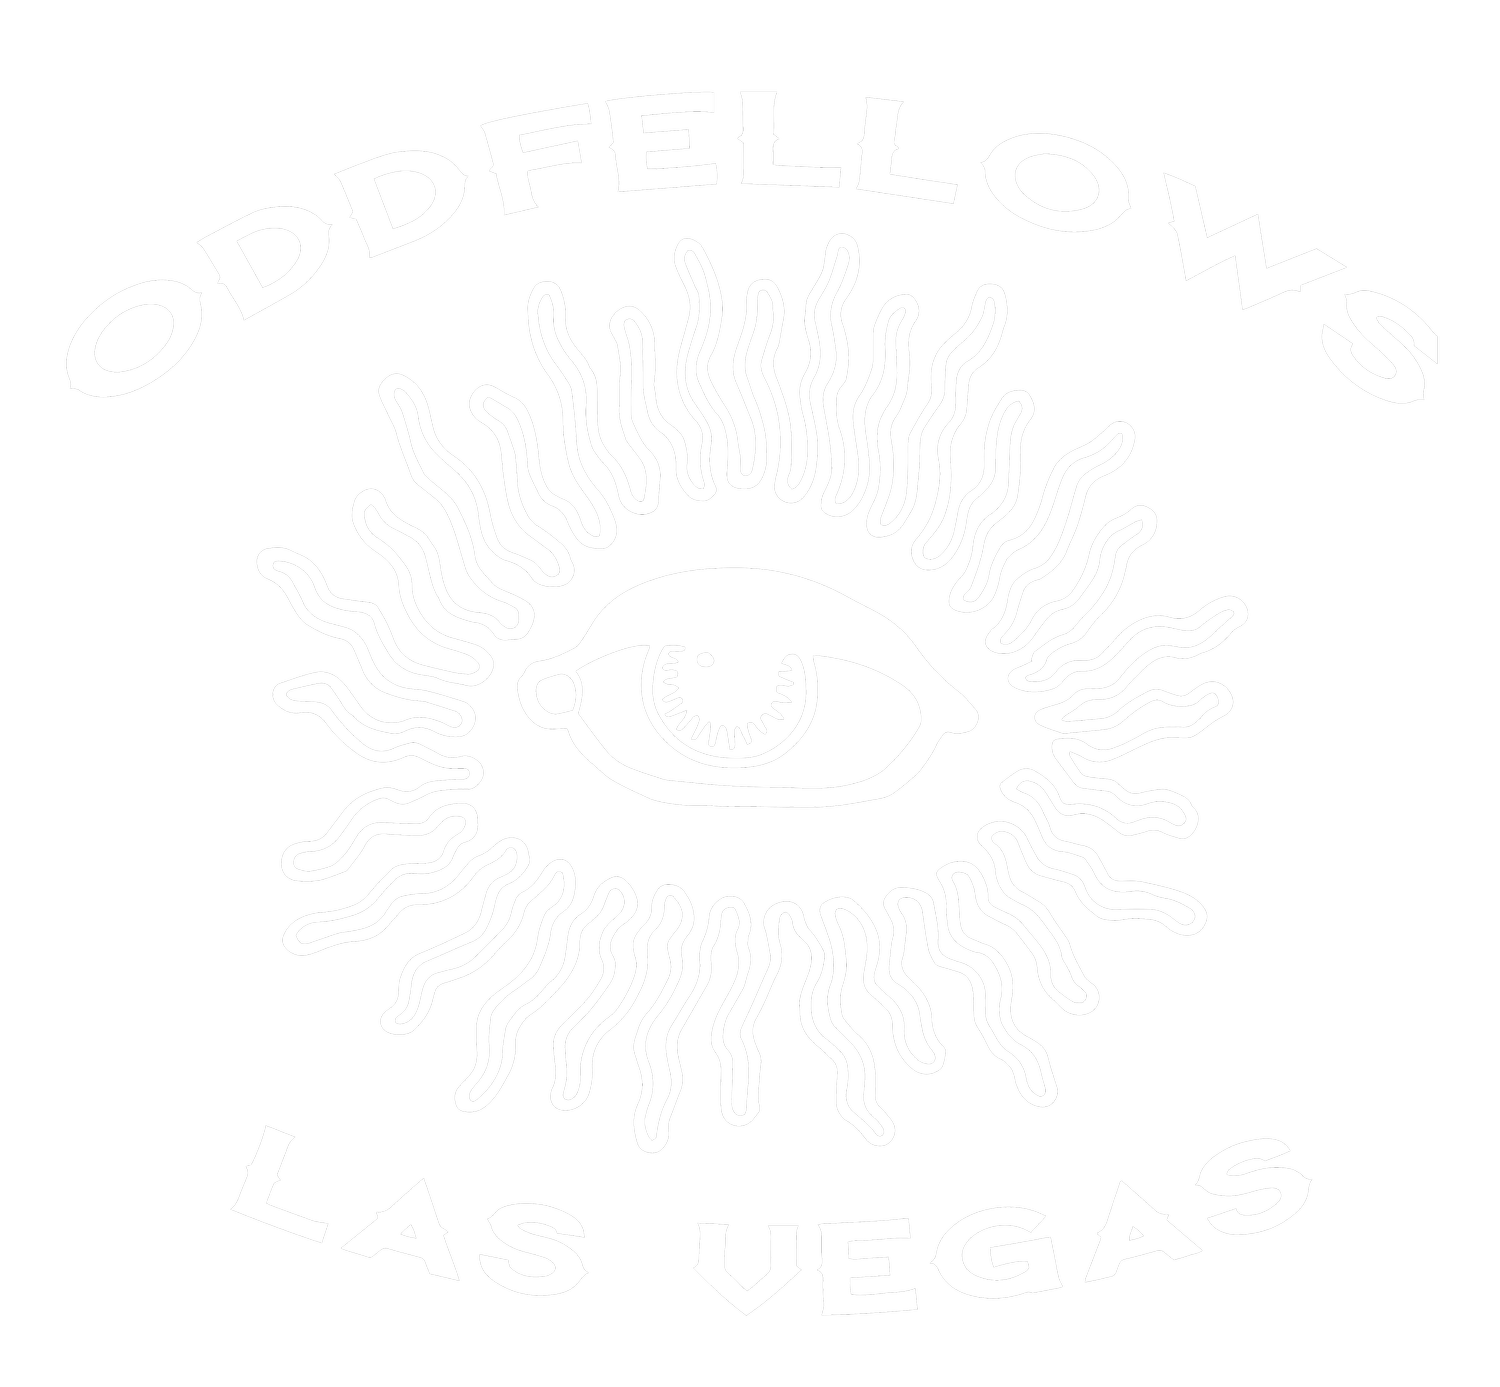 Oddfellows - Alternative Dance Club in Downtown Las Vegas